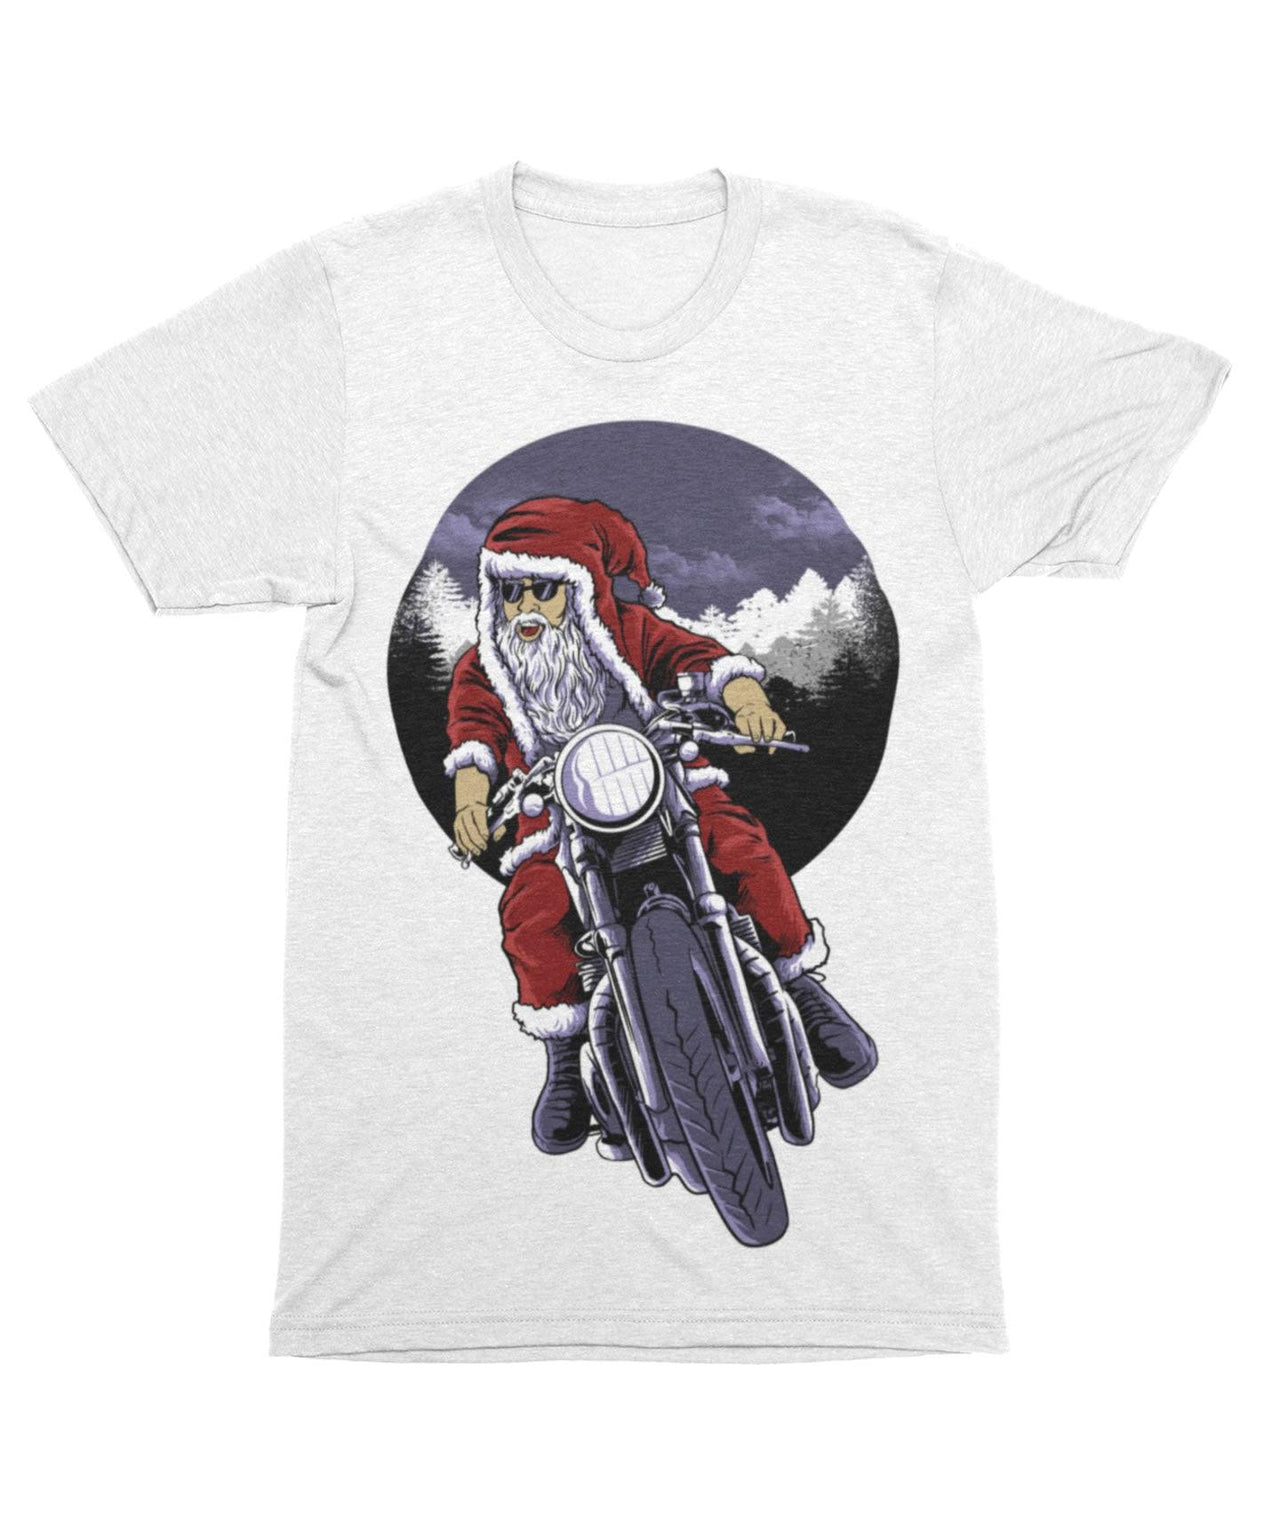 Holiday Rider Santa Unisex Christmas Unisex T-Shirt For Men And Women 8Ball